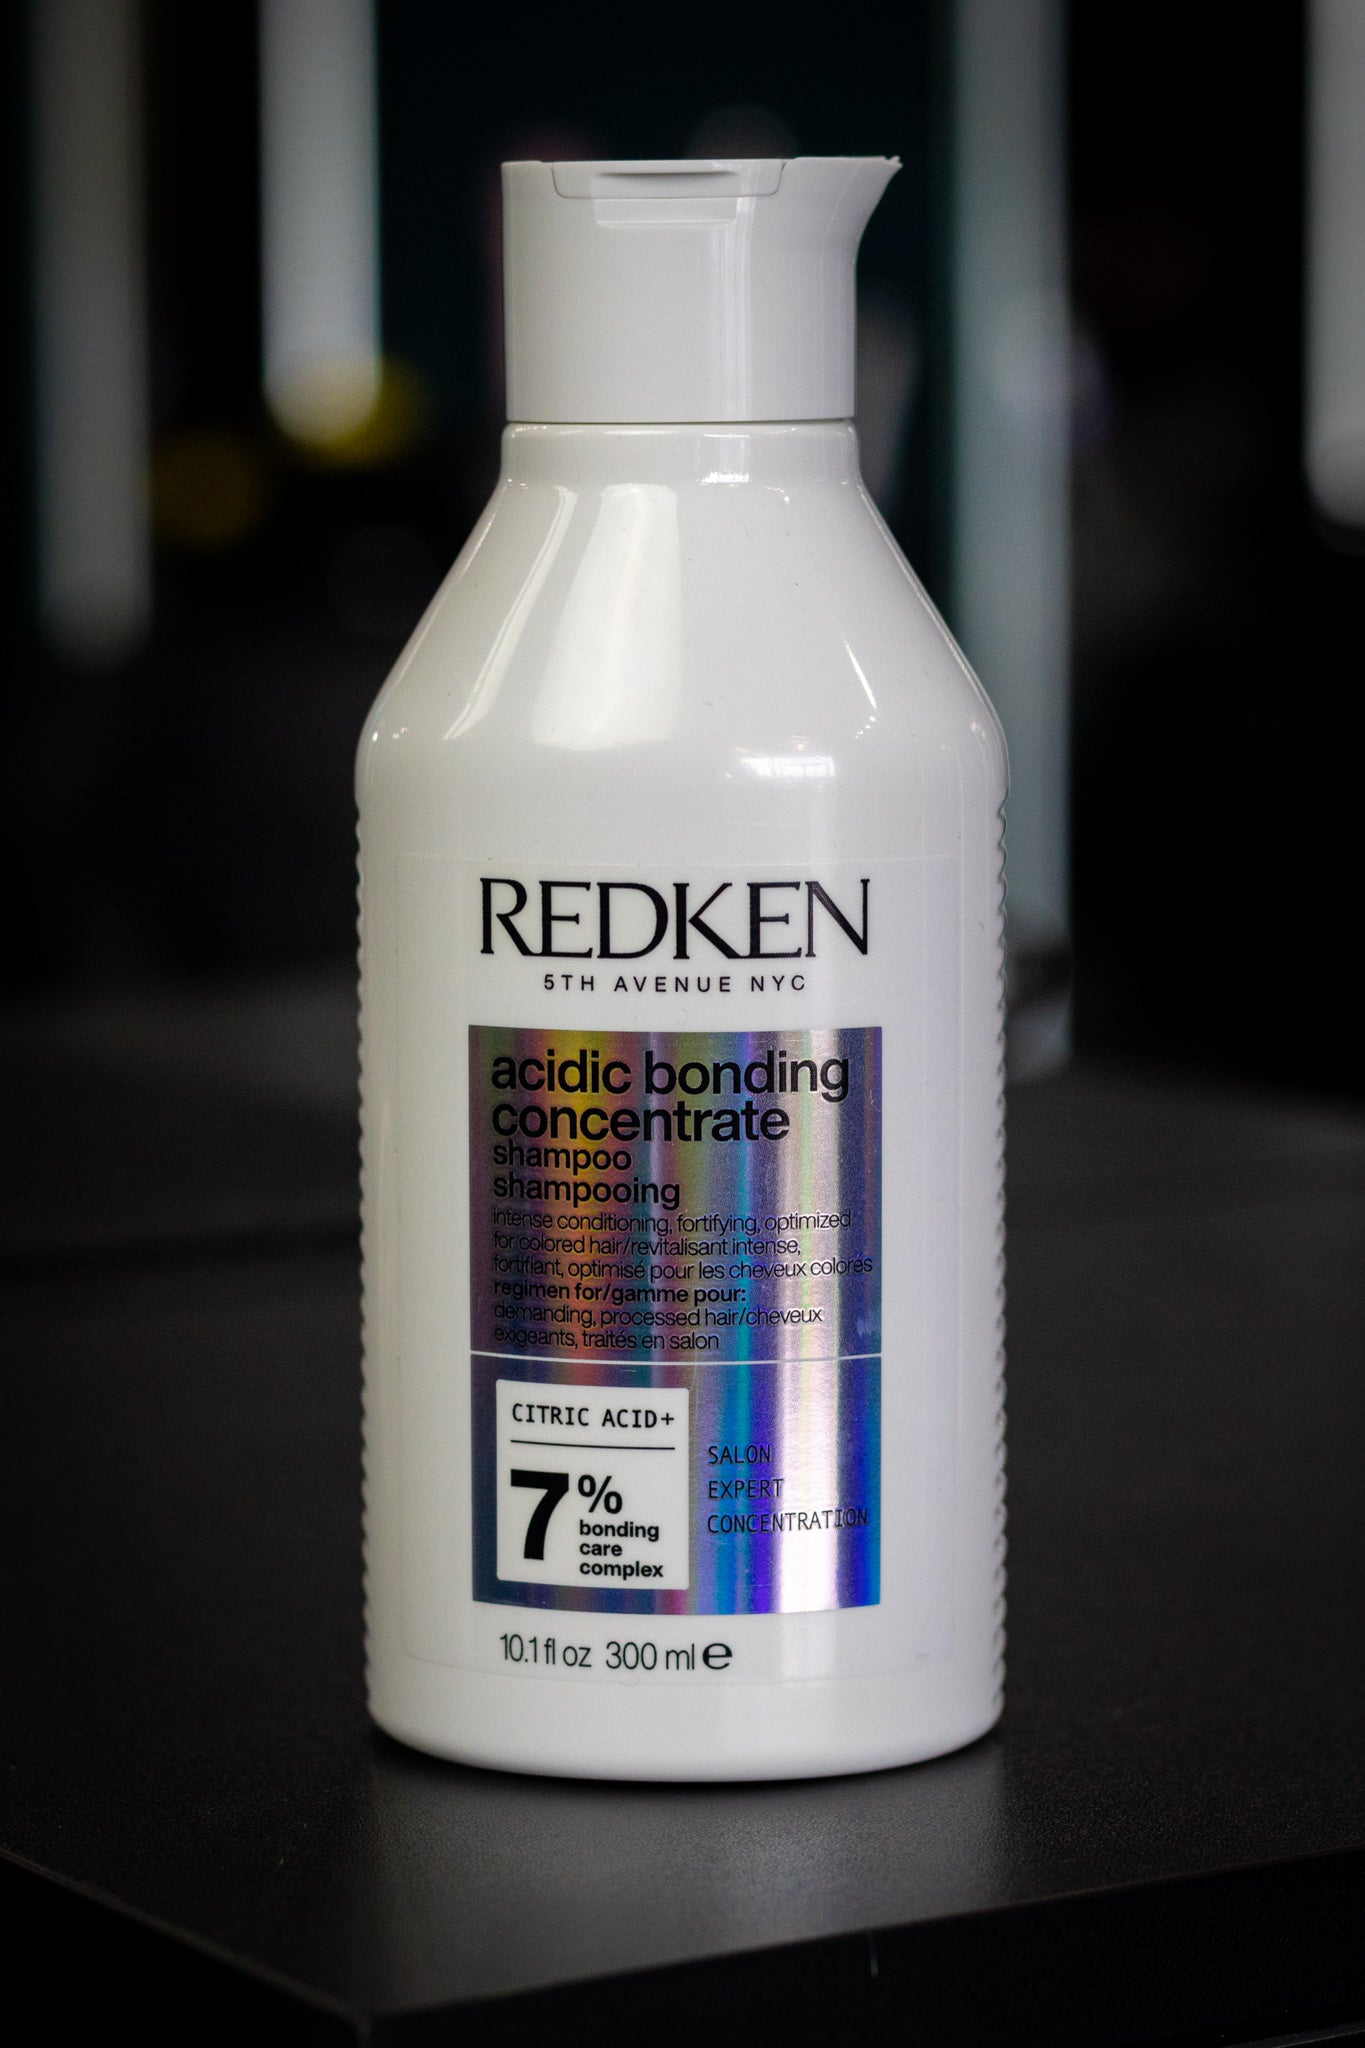 Redken Acidic Bonding Concentrate Shampoo